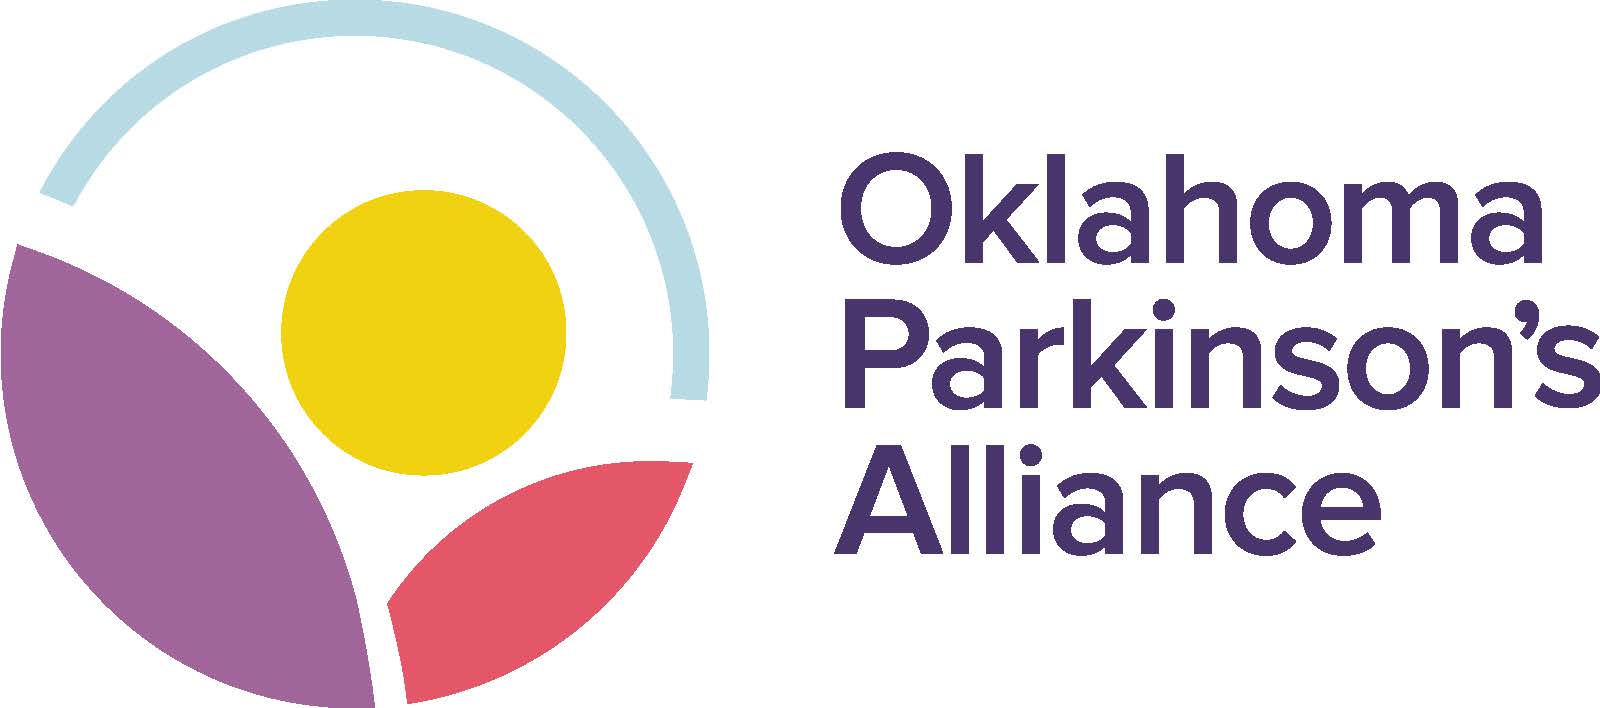 Oklahoma Parkinson's Alliance